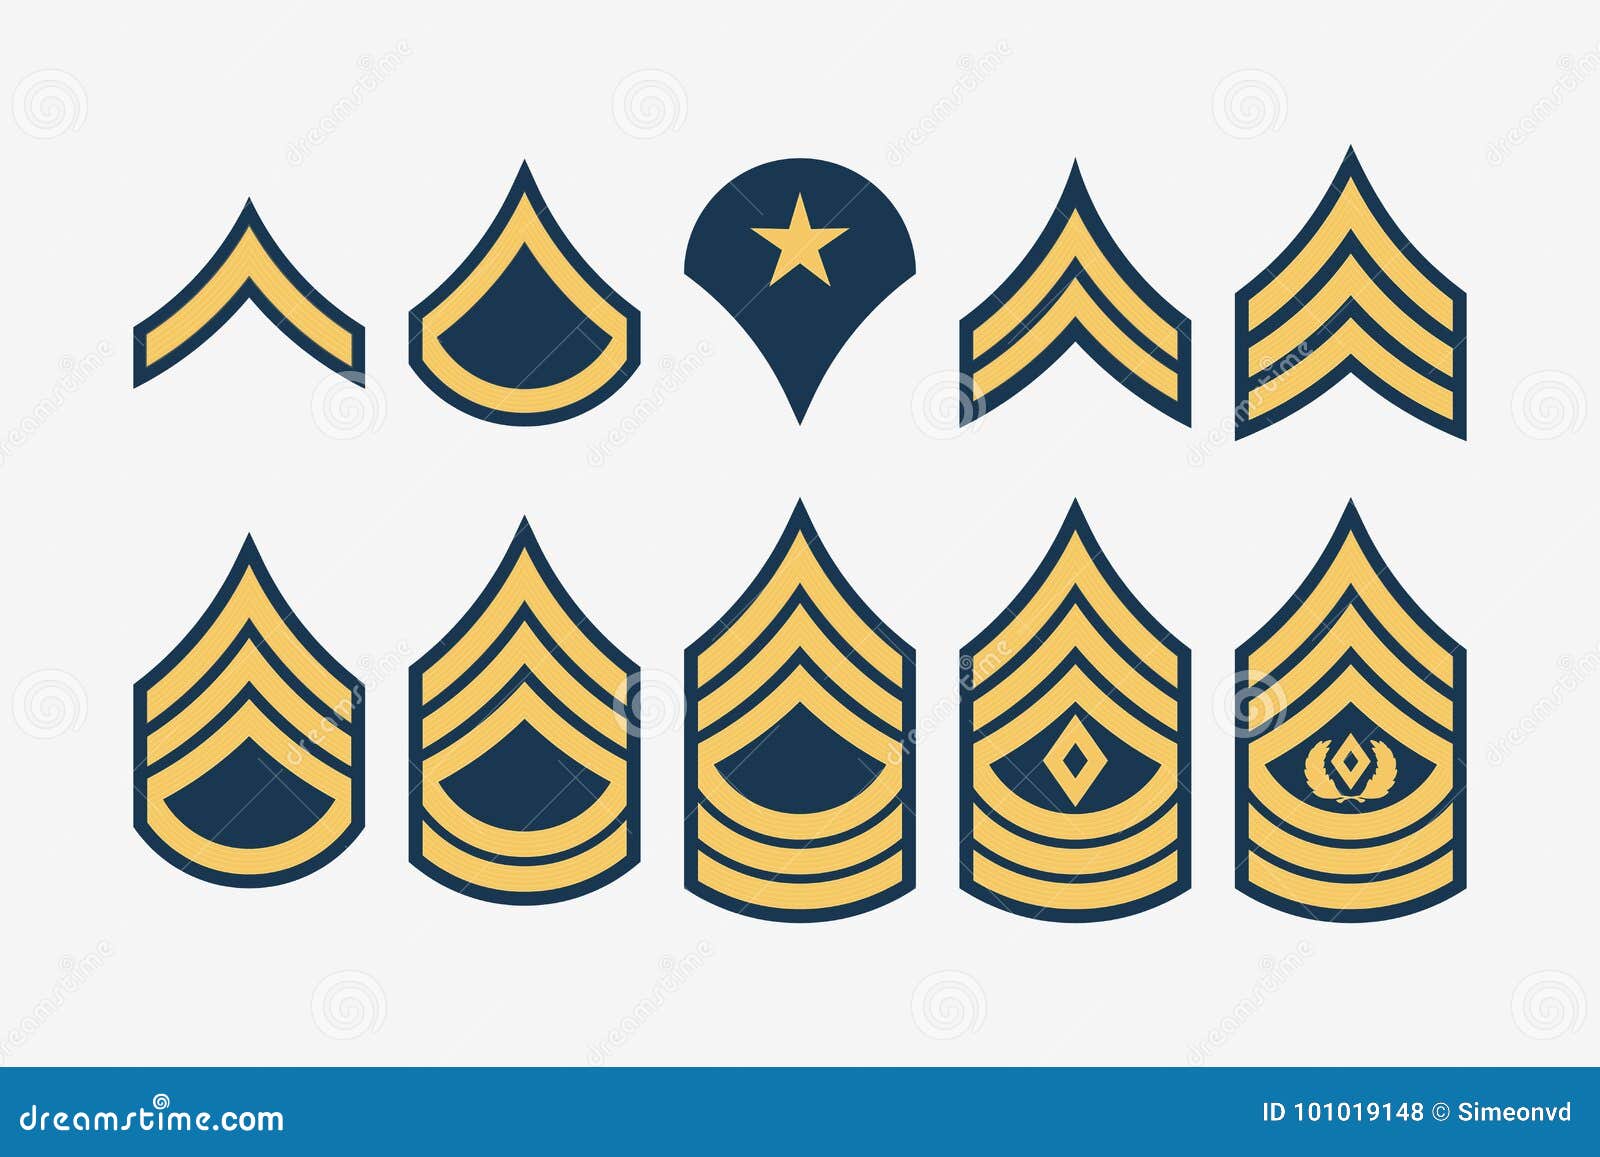 military ranks stripes and chevrons.  set army insignia